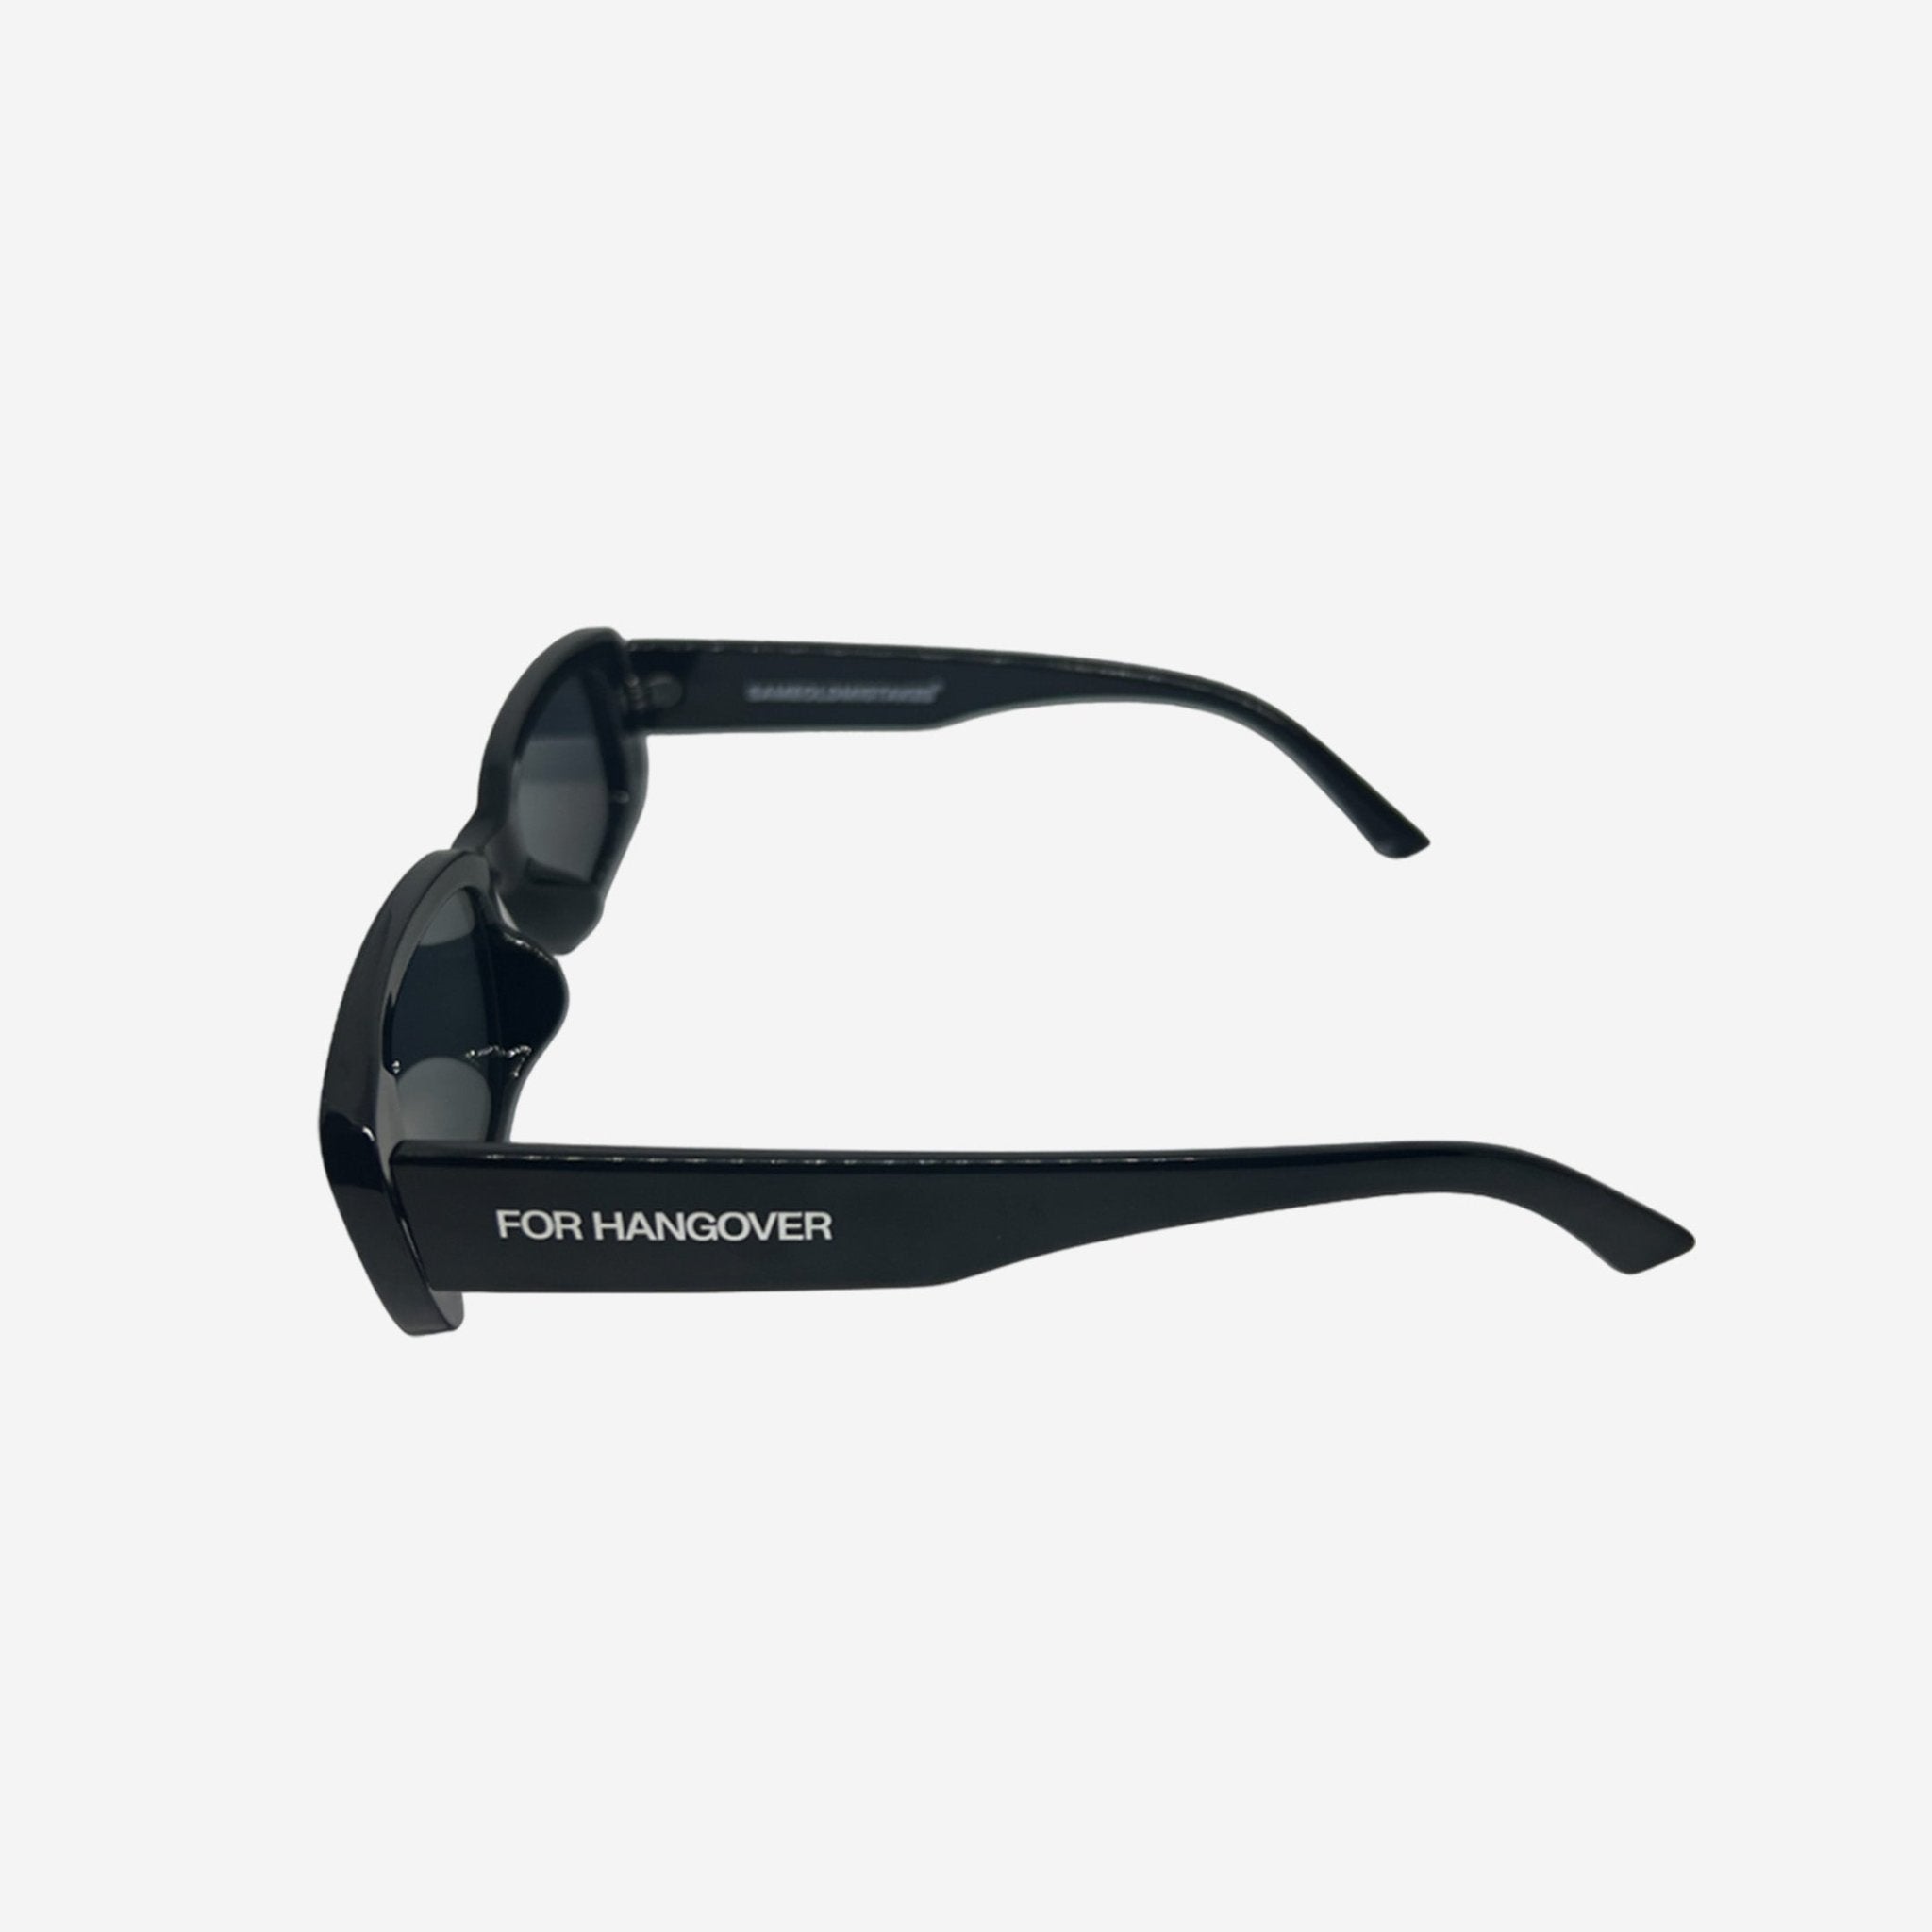 For hangover sunglasses black - sameoldmistakes